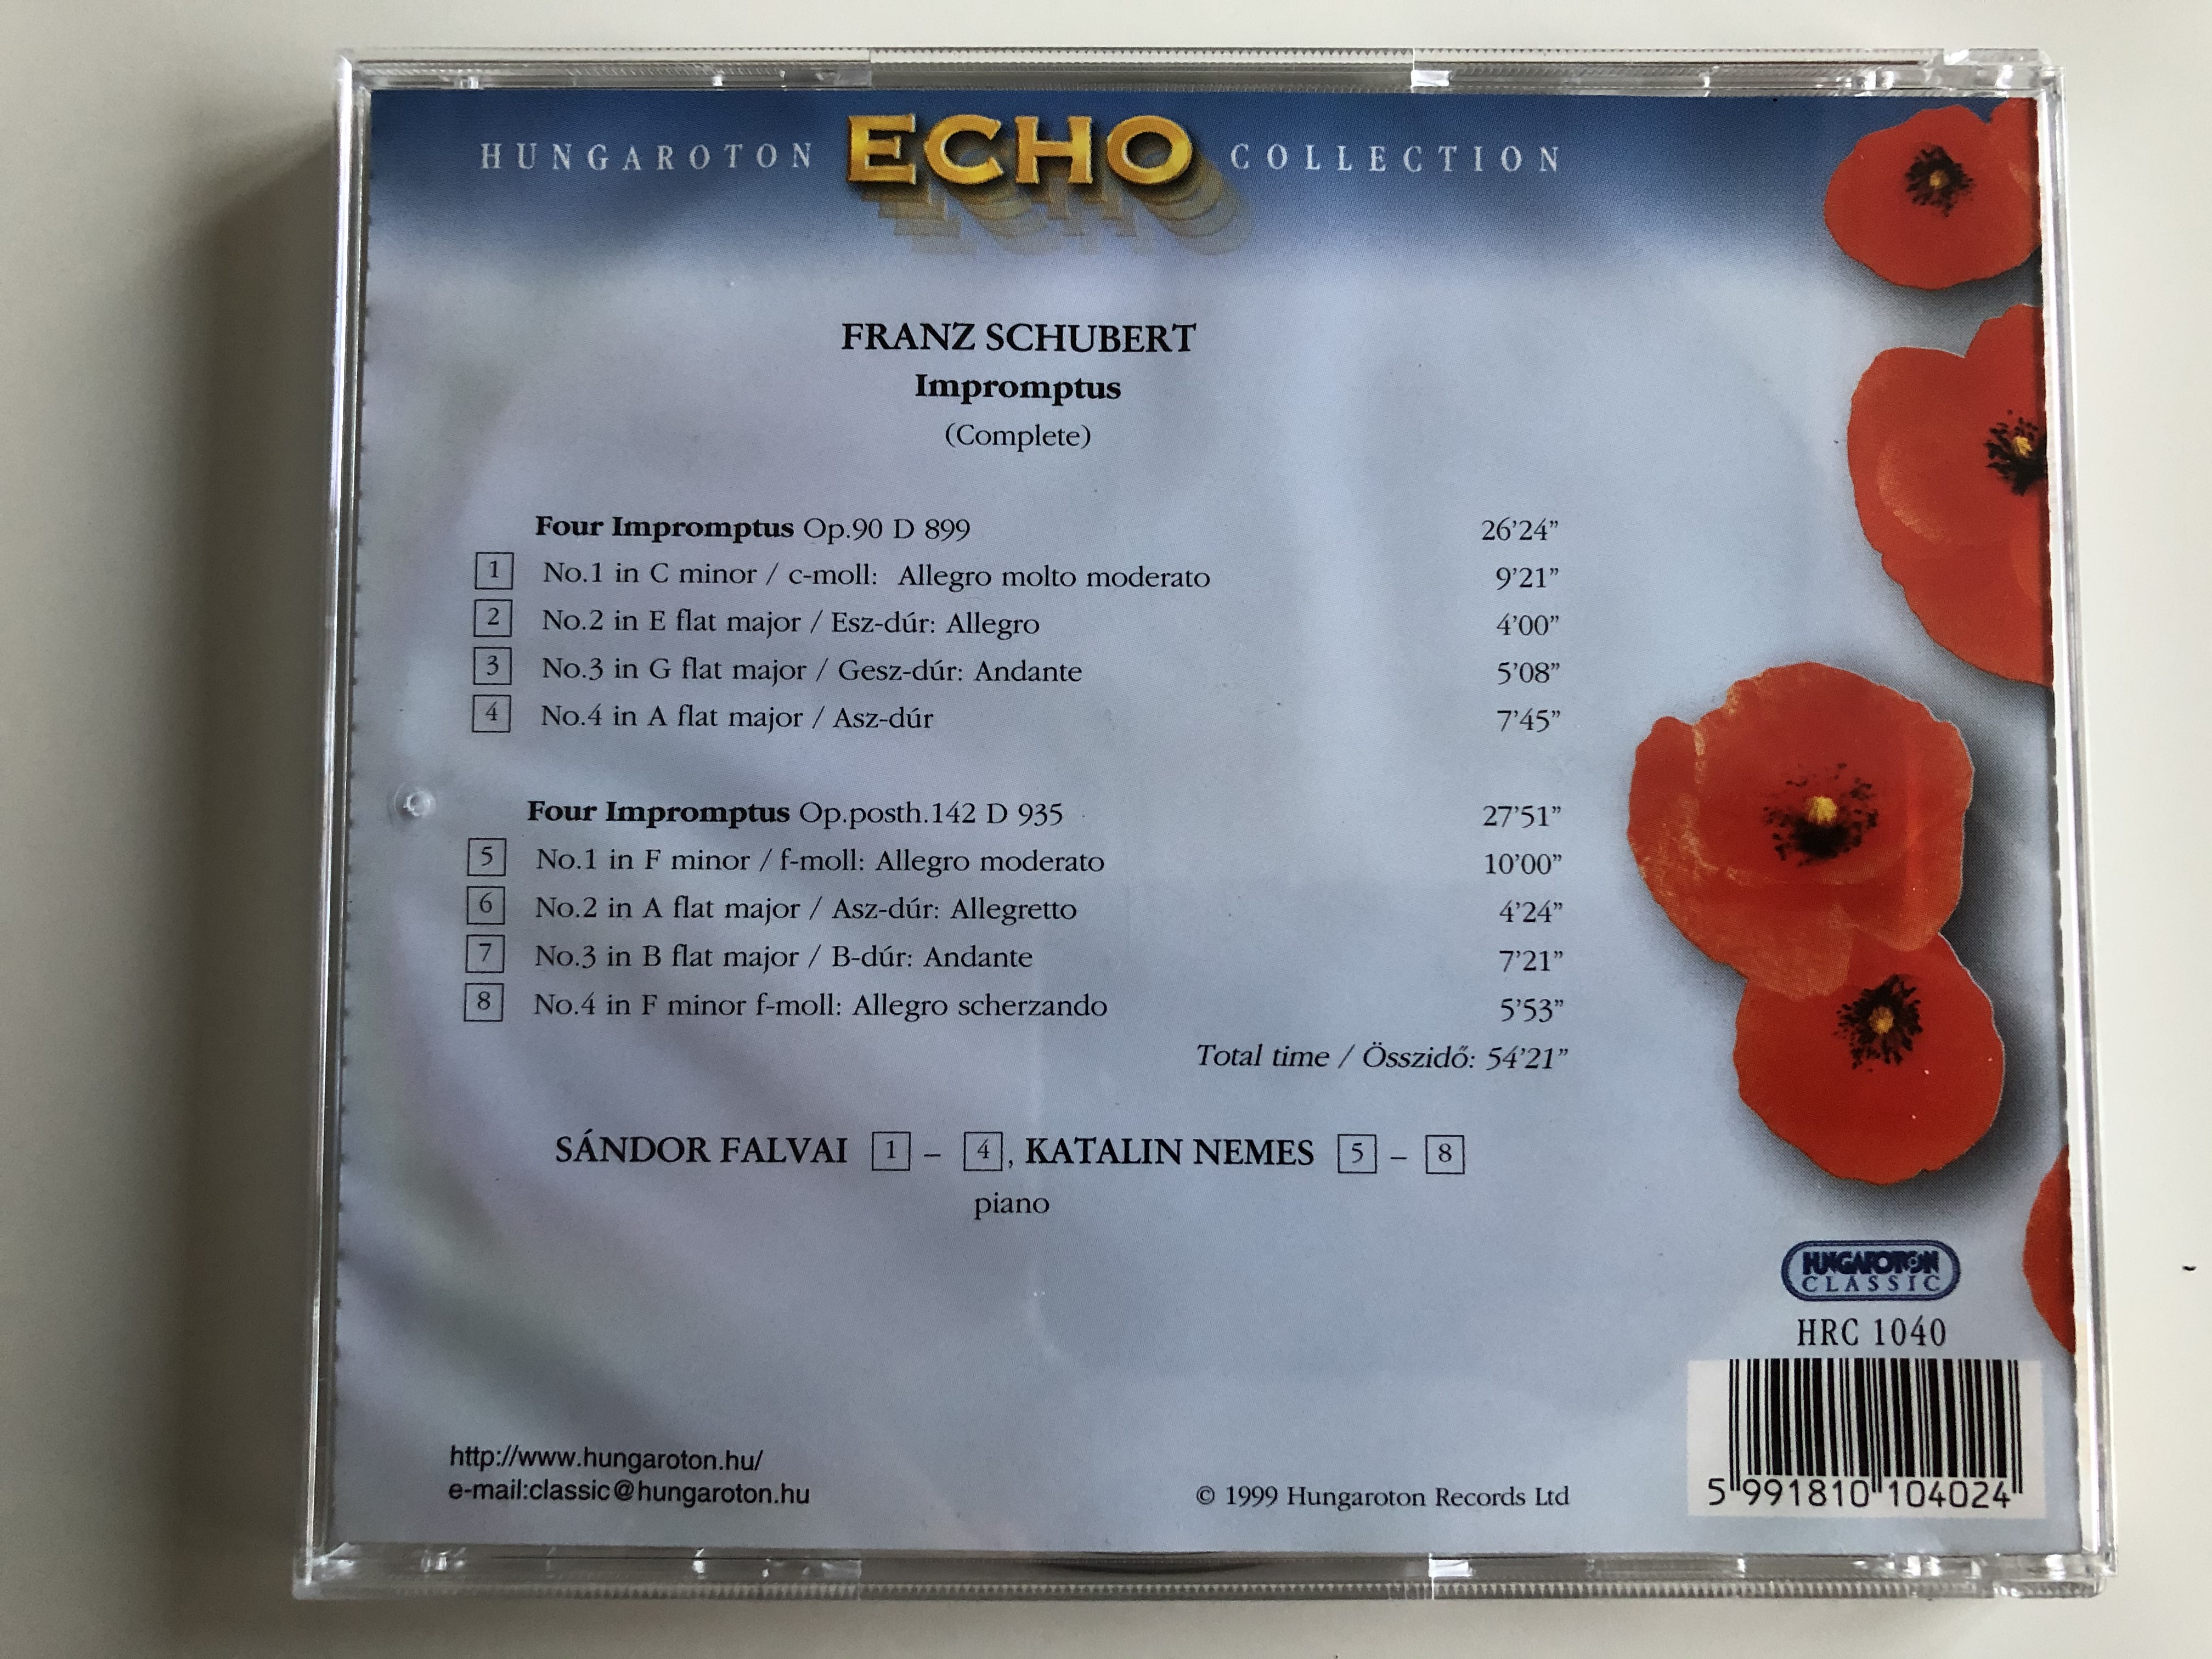 schubert-impromptus-complete-piano-s-ndor-falvai-katalin-nemes-hungaroton-classic-audio-cd-1999-stereo-hrc-1040-4-.jpg